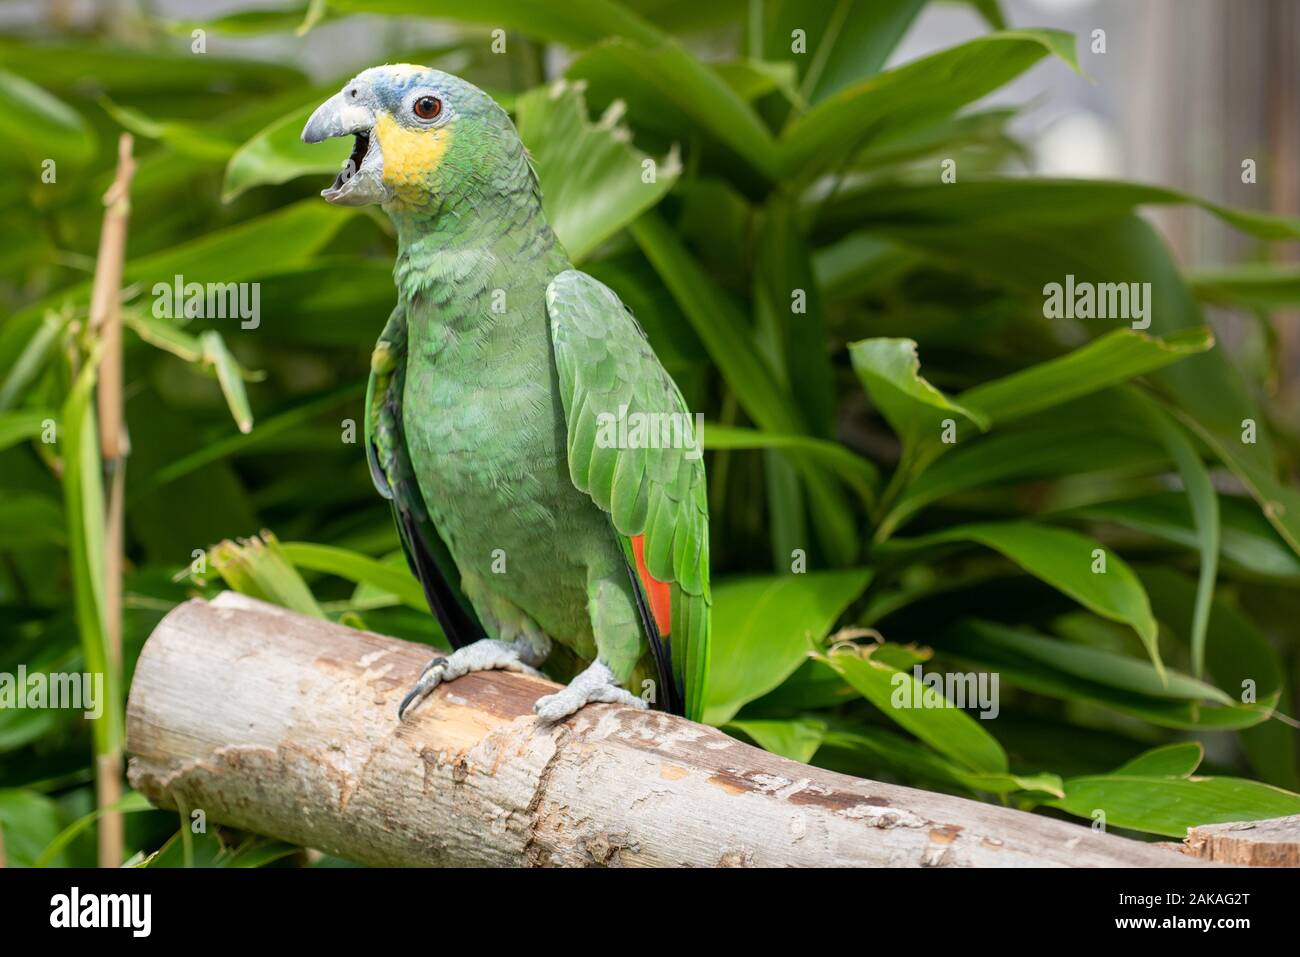 A parakeet on its perch Stock Photo